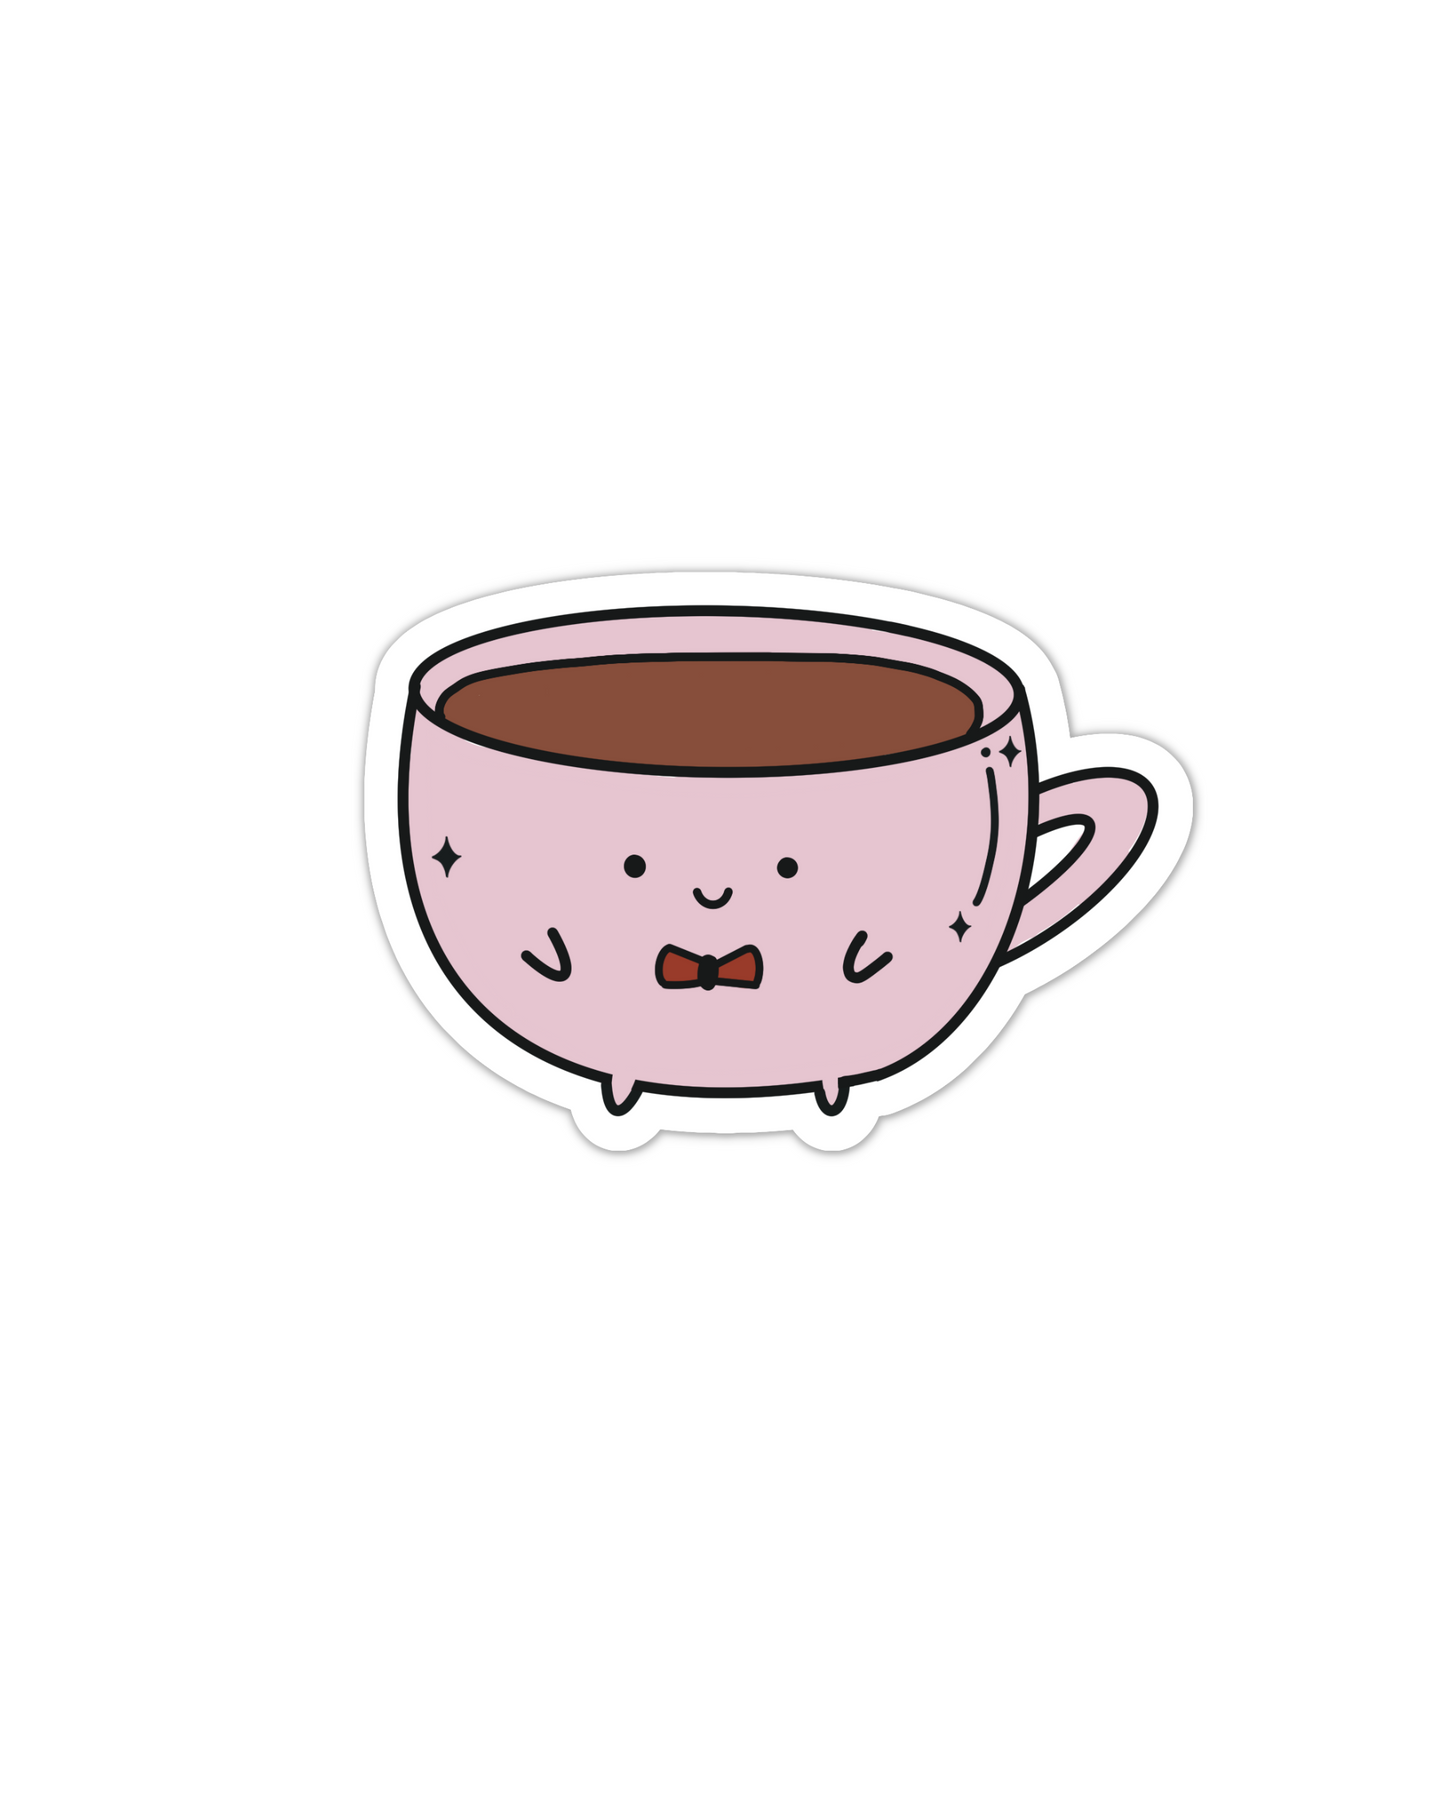 Kawaii coffee Cup hard enamel pin